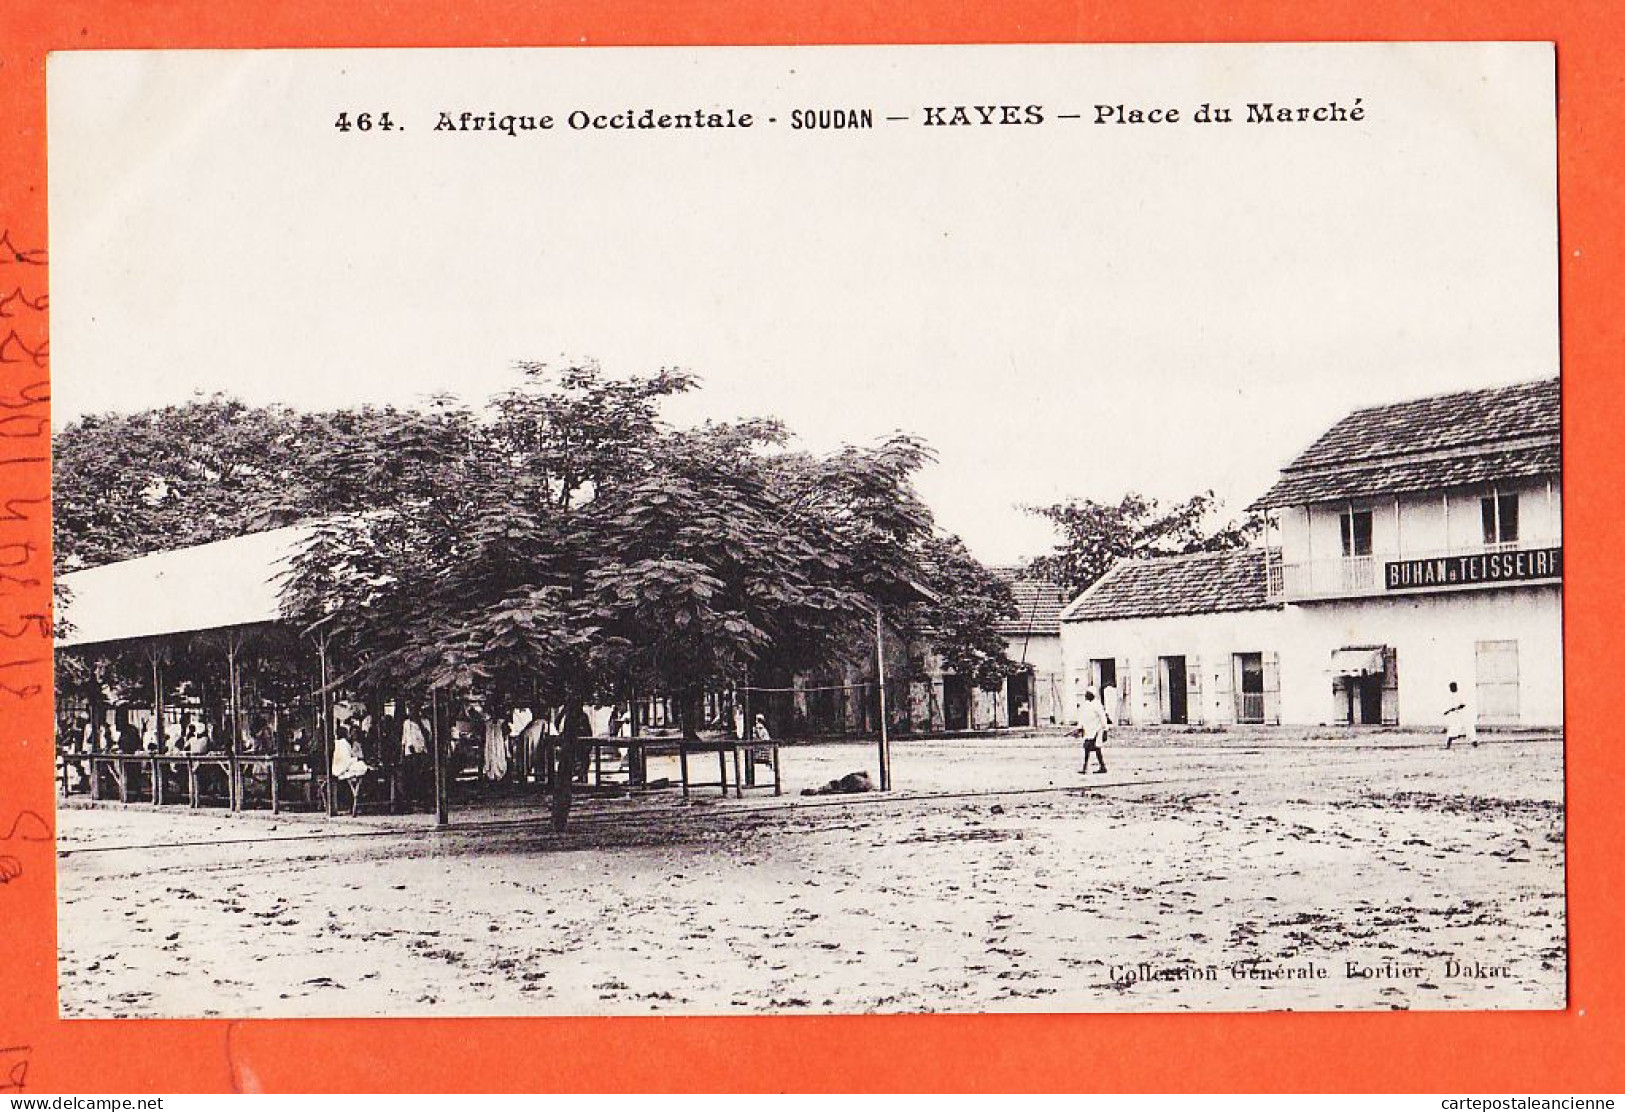 32974 / ♥️ KAYES Soudan (•◡•) BUHAN-TEISSEIRE Place Marché ◉ Collection Generale FORTIER Dakar 464 Afrique Occidentale - Soudan